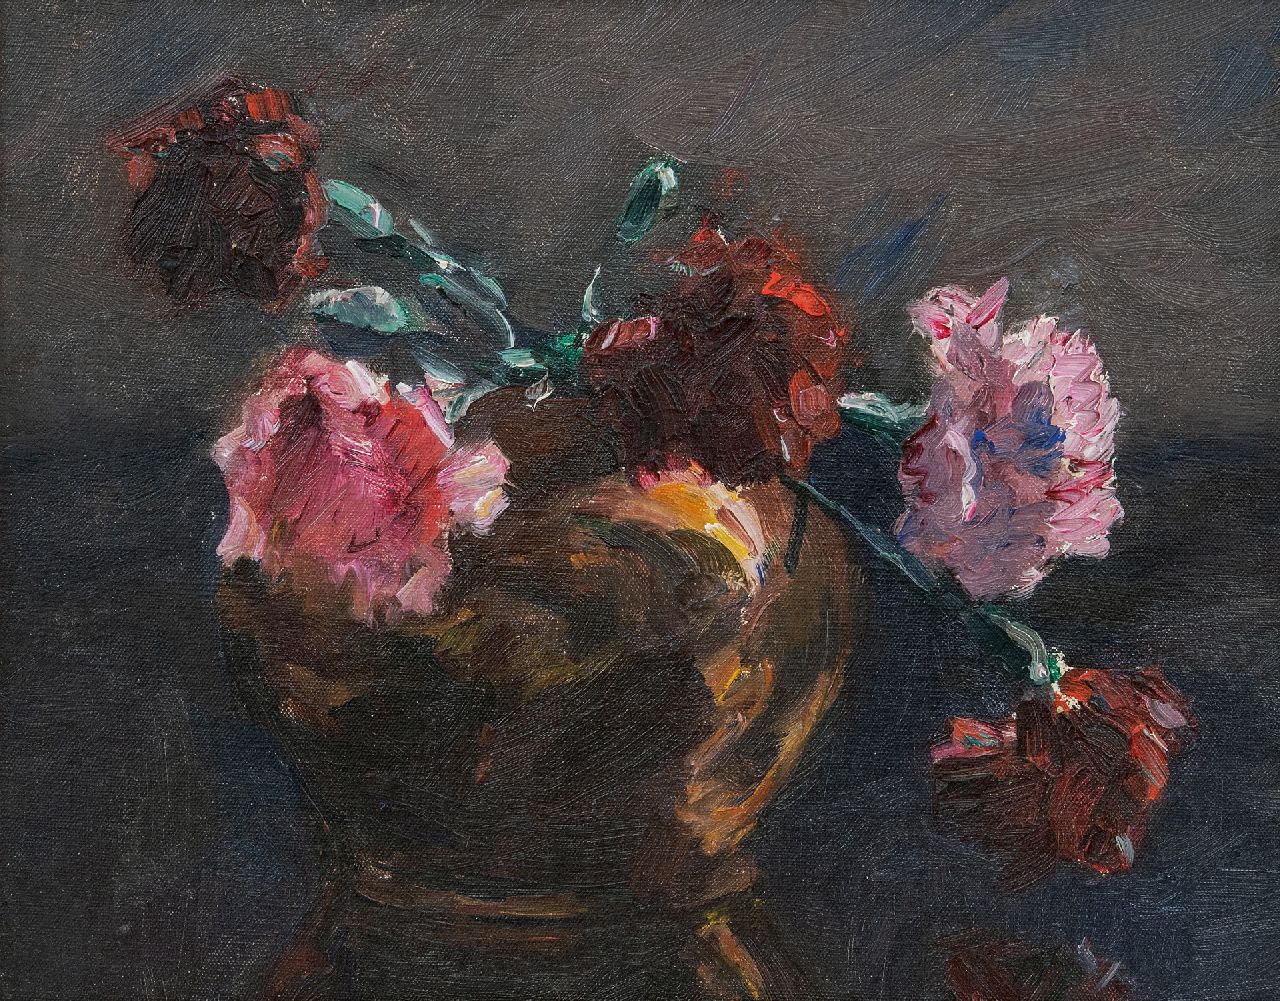 Tonge L.L. van der | 'Lammert' Leire van der Tonge | Paintings offered for sale | Carnations, oil on canvas laid down on panel 23.6 x 28.9 cm